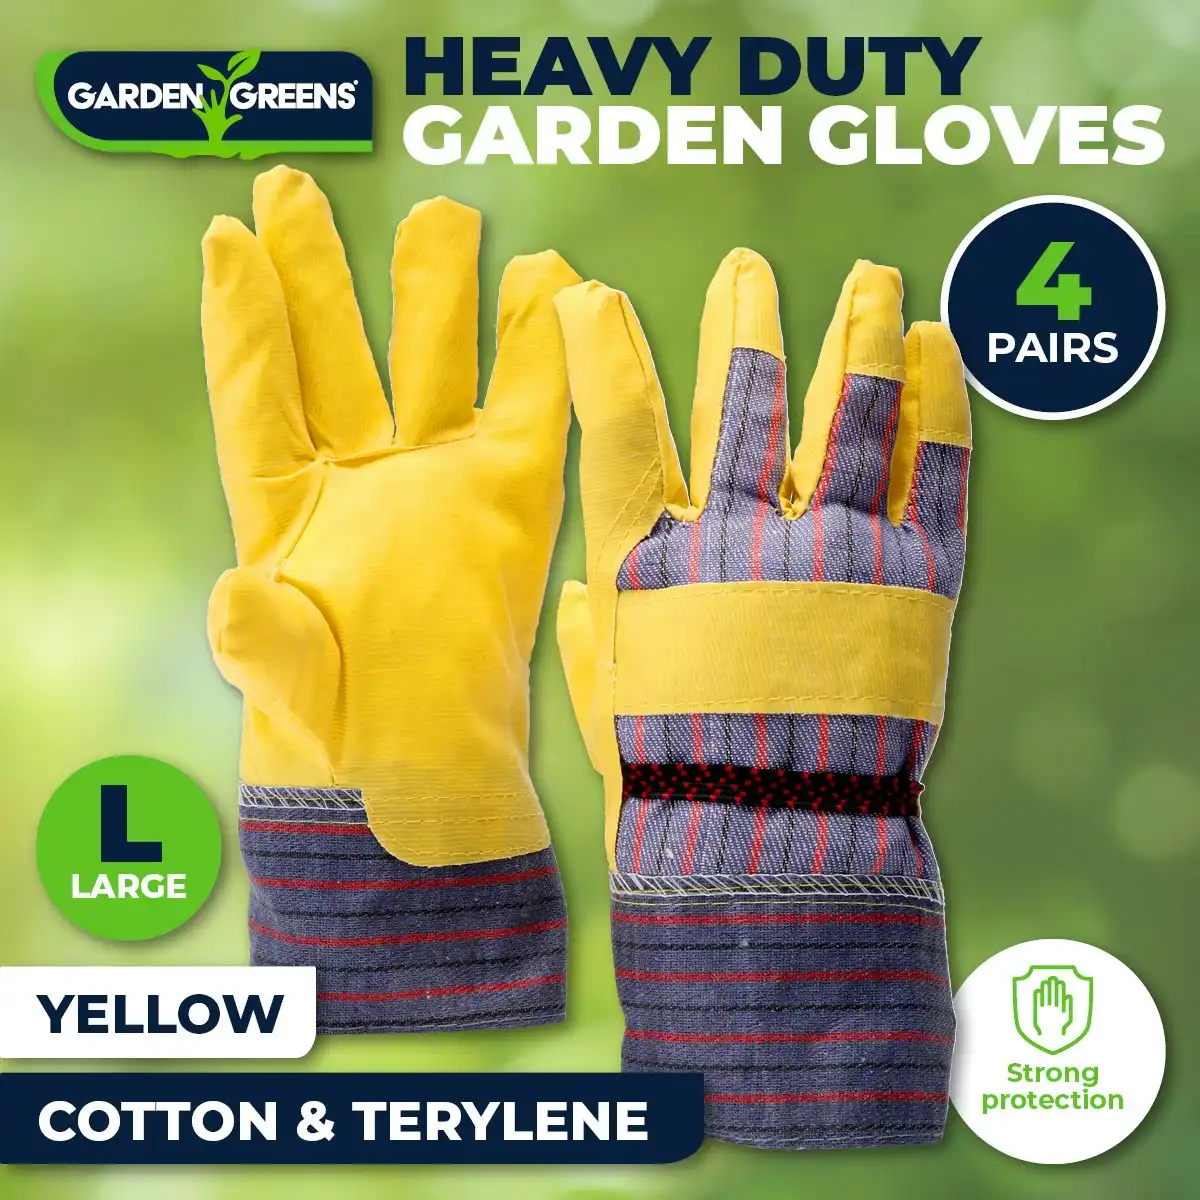 Garden Greens 4PAIR Garden Gloves Yellow Durable Cotton Comfortable Adult Size